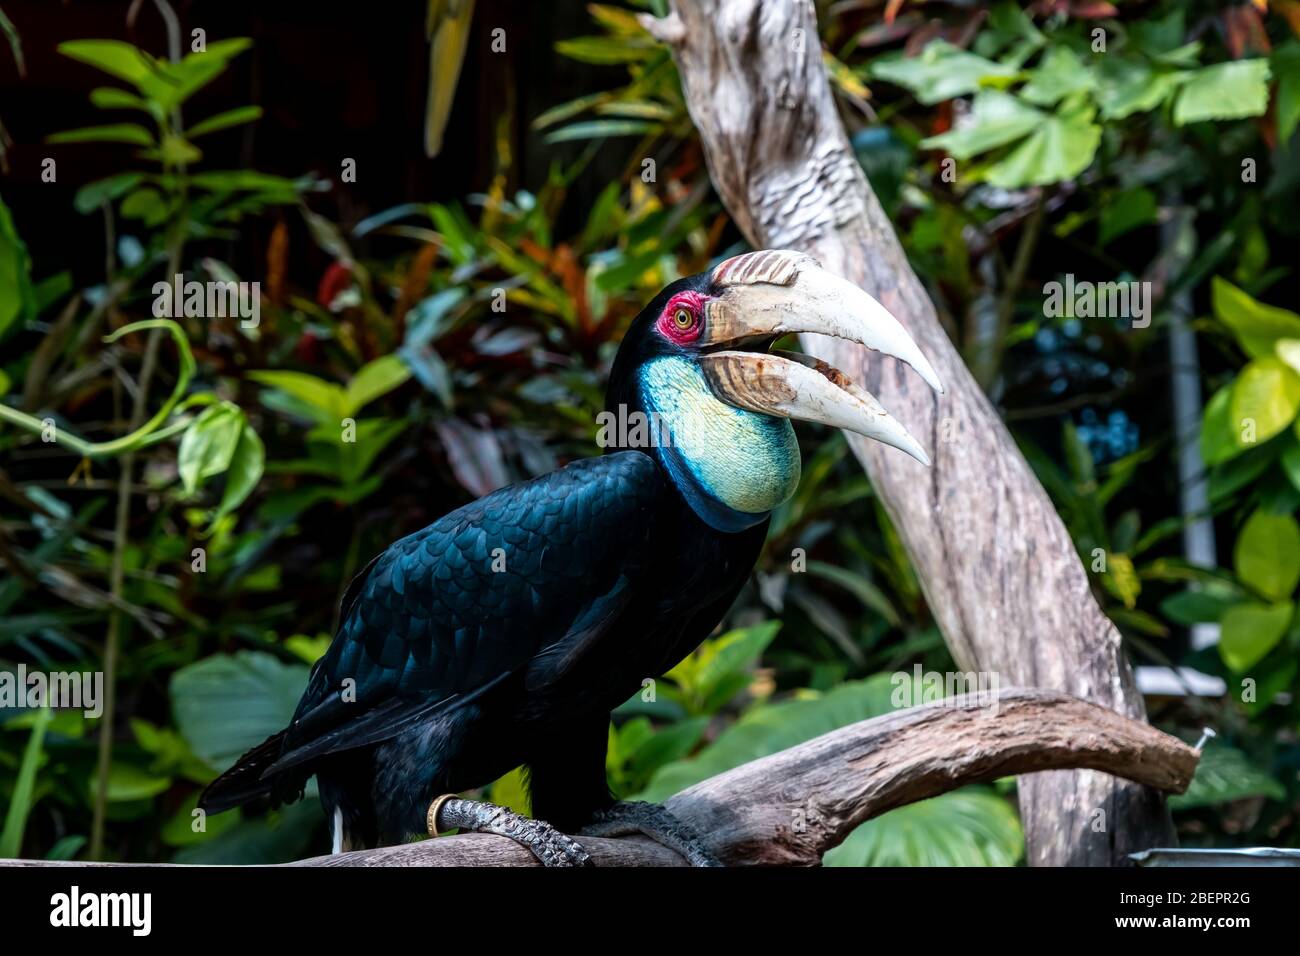 Great hornbill bird on branch, tropical Indian great hornbill bird on branch Stock Photo